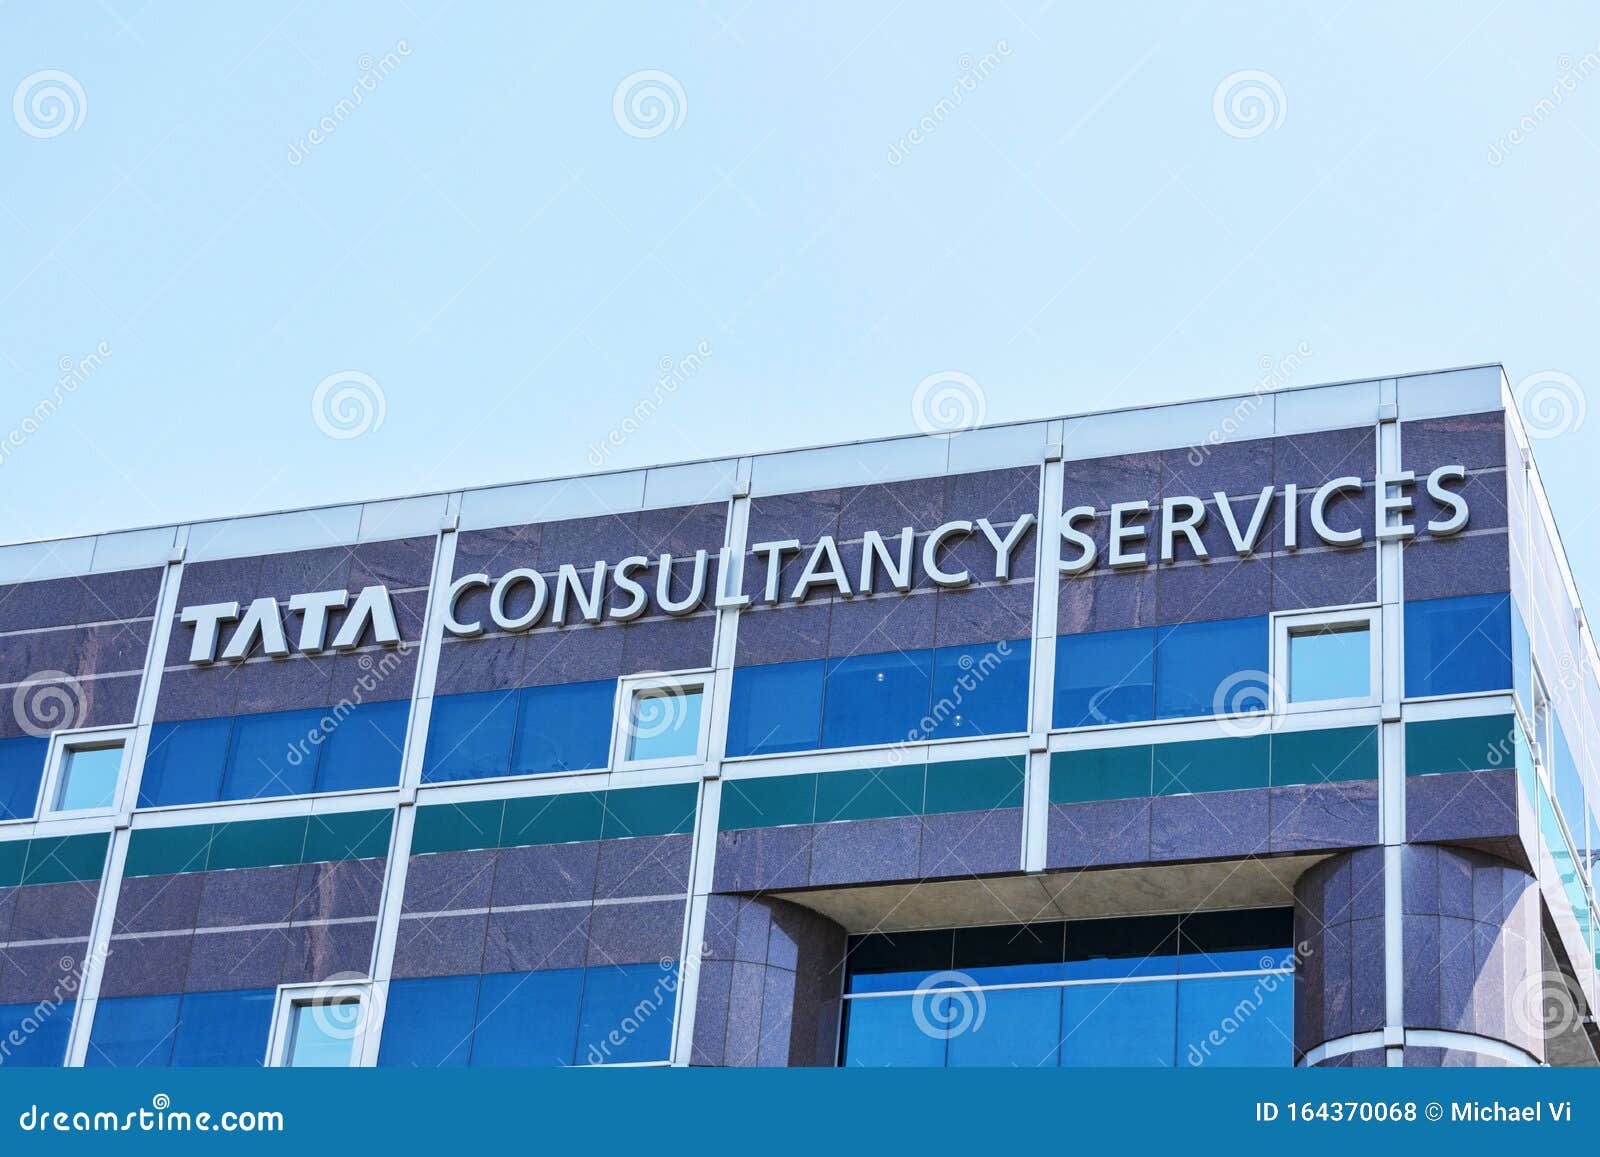 toronto-canada-november-13-2018-tata-consultancy-services-logo-on